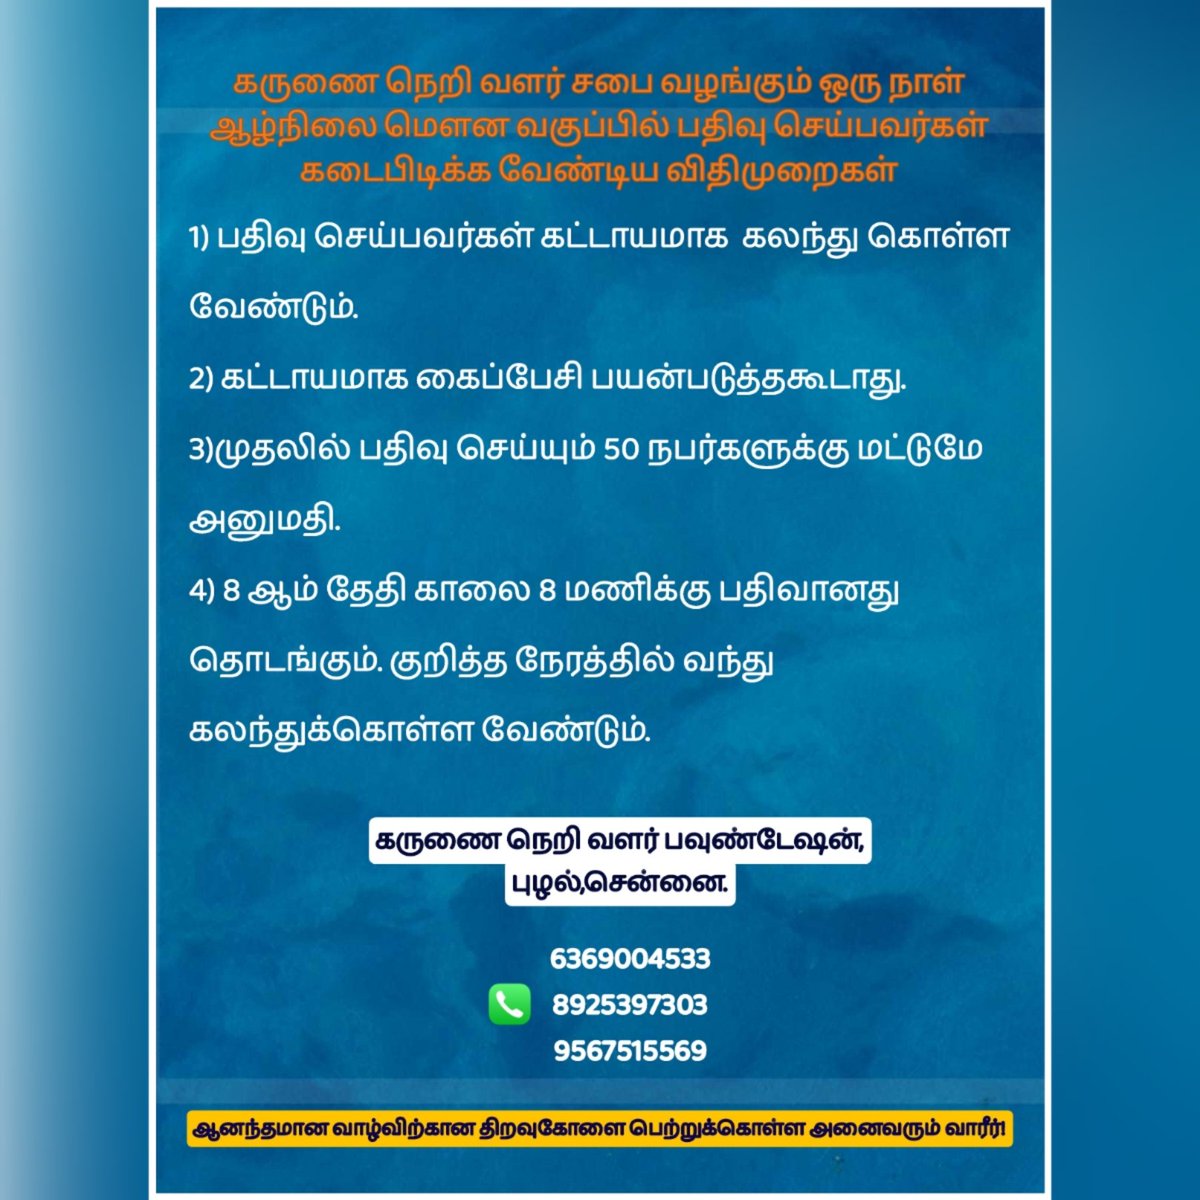 One Day Deep Inner Silence Program @Chennai
Registration Going!
#DhayavuprabhavathiAmma #Karunainerivallarfoundation #karunainerivallarsabai #Innersilence #Program